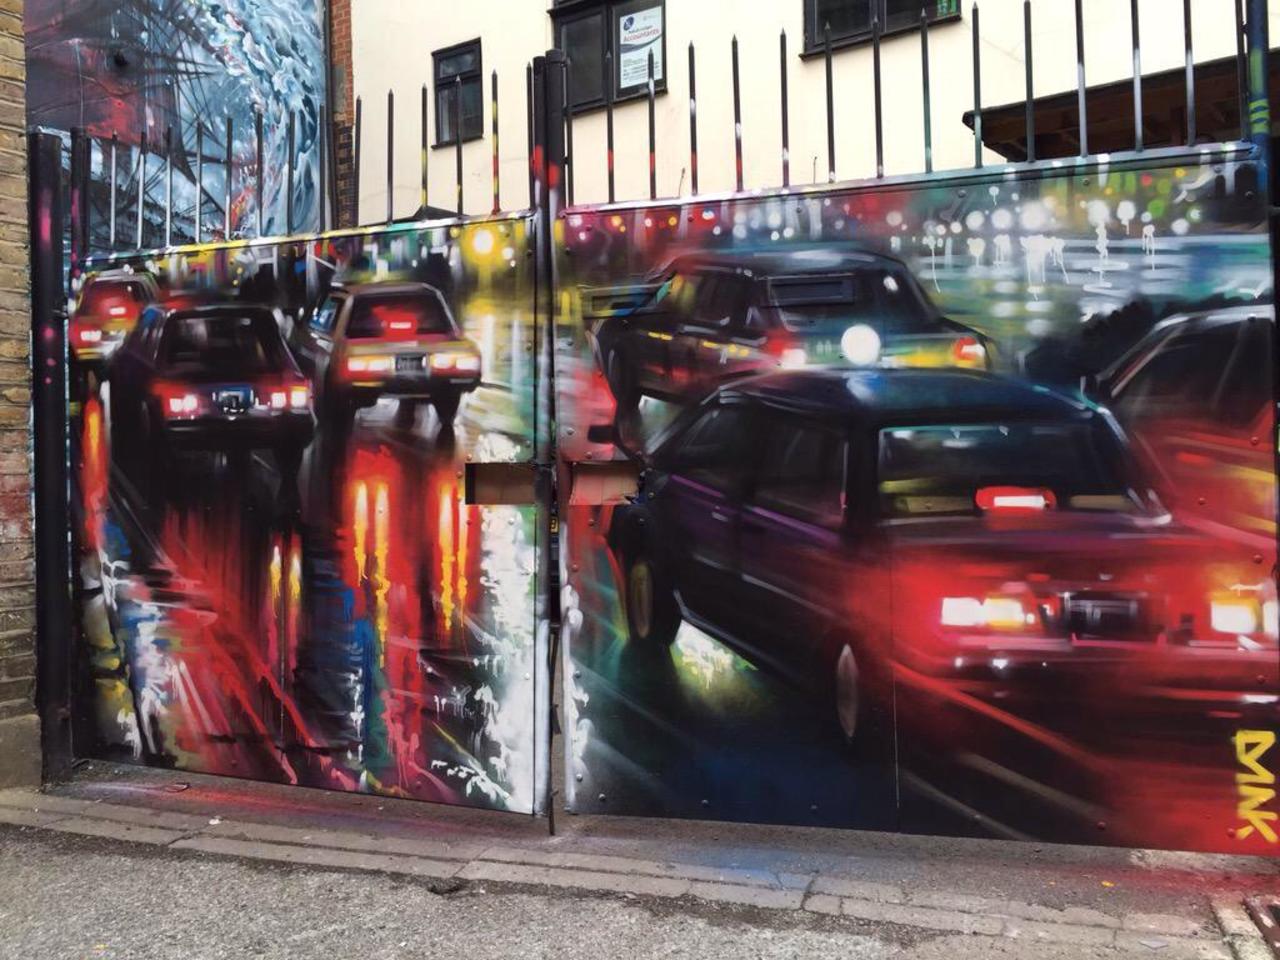 New Street Art by DanKitchener in Brick Lane London 

#art #graffiti #mural #streetart http://t.co/nWs3WYYqgf